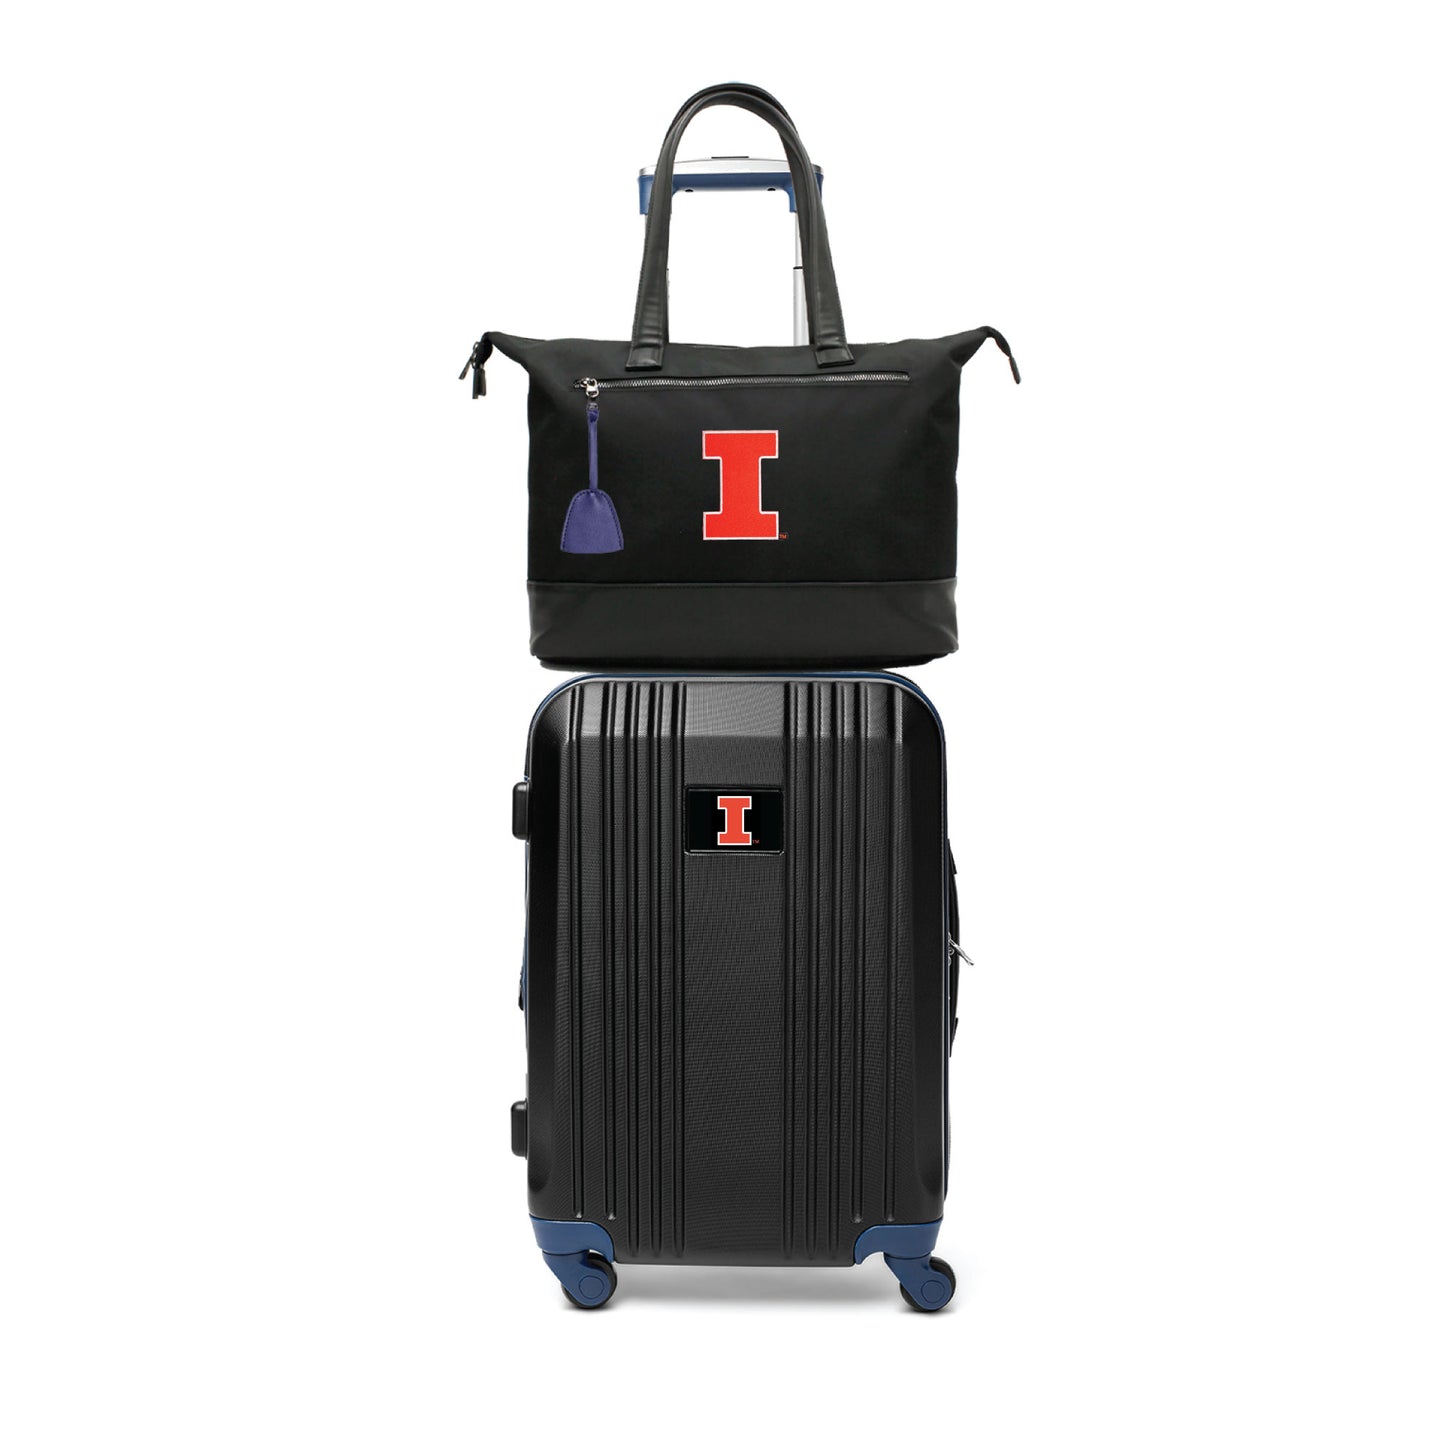 Illinois Fighting Illini Premium Laptop Tote Bag and Luggage Set